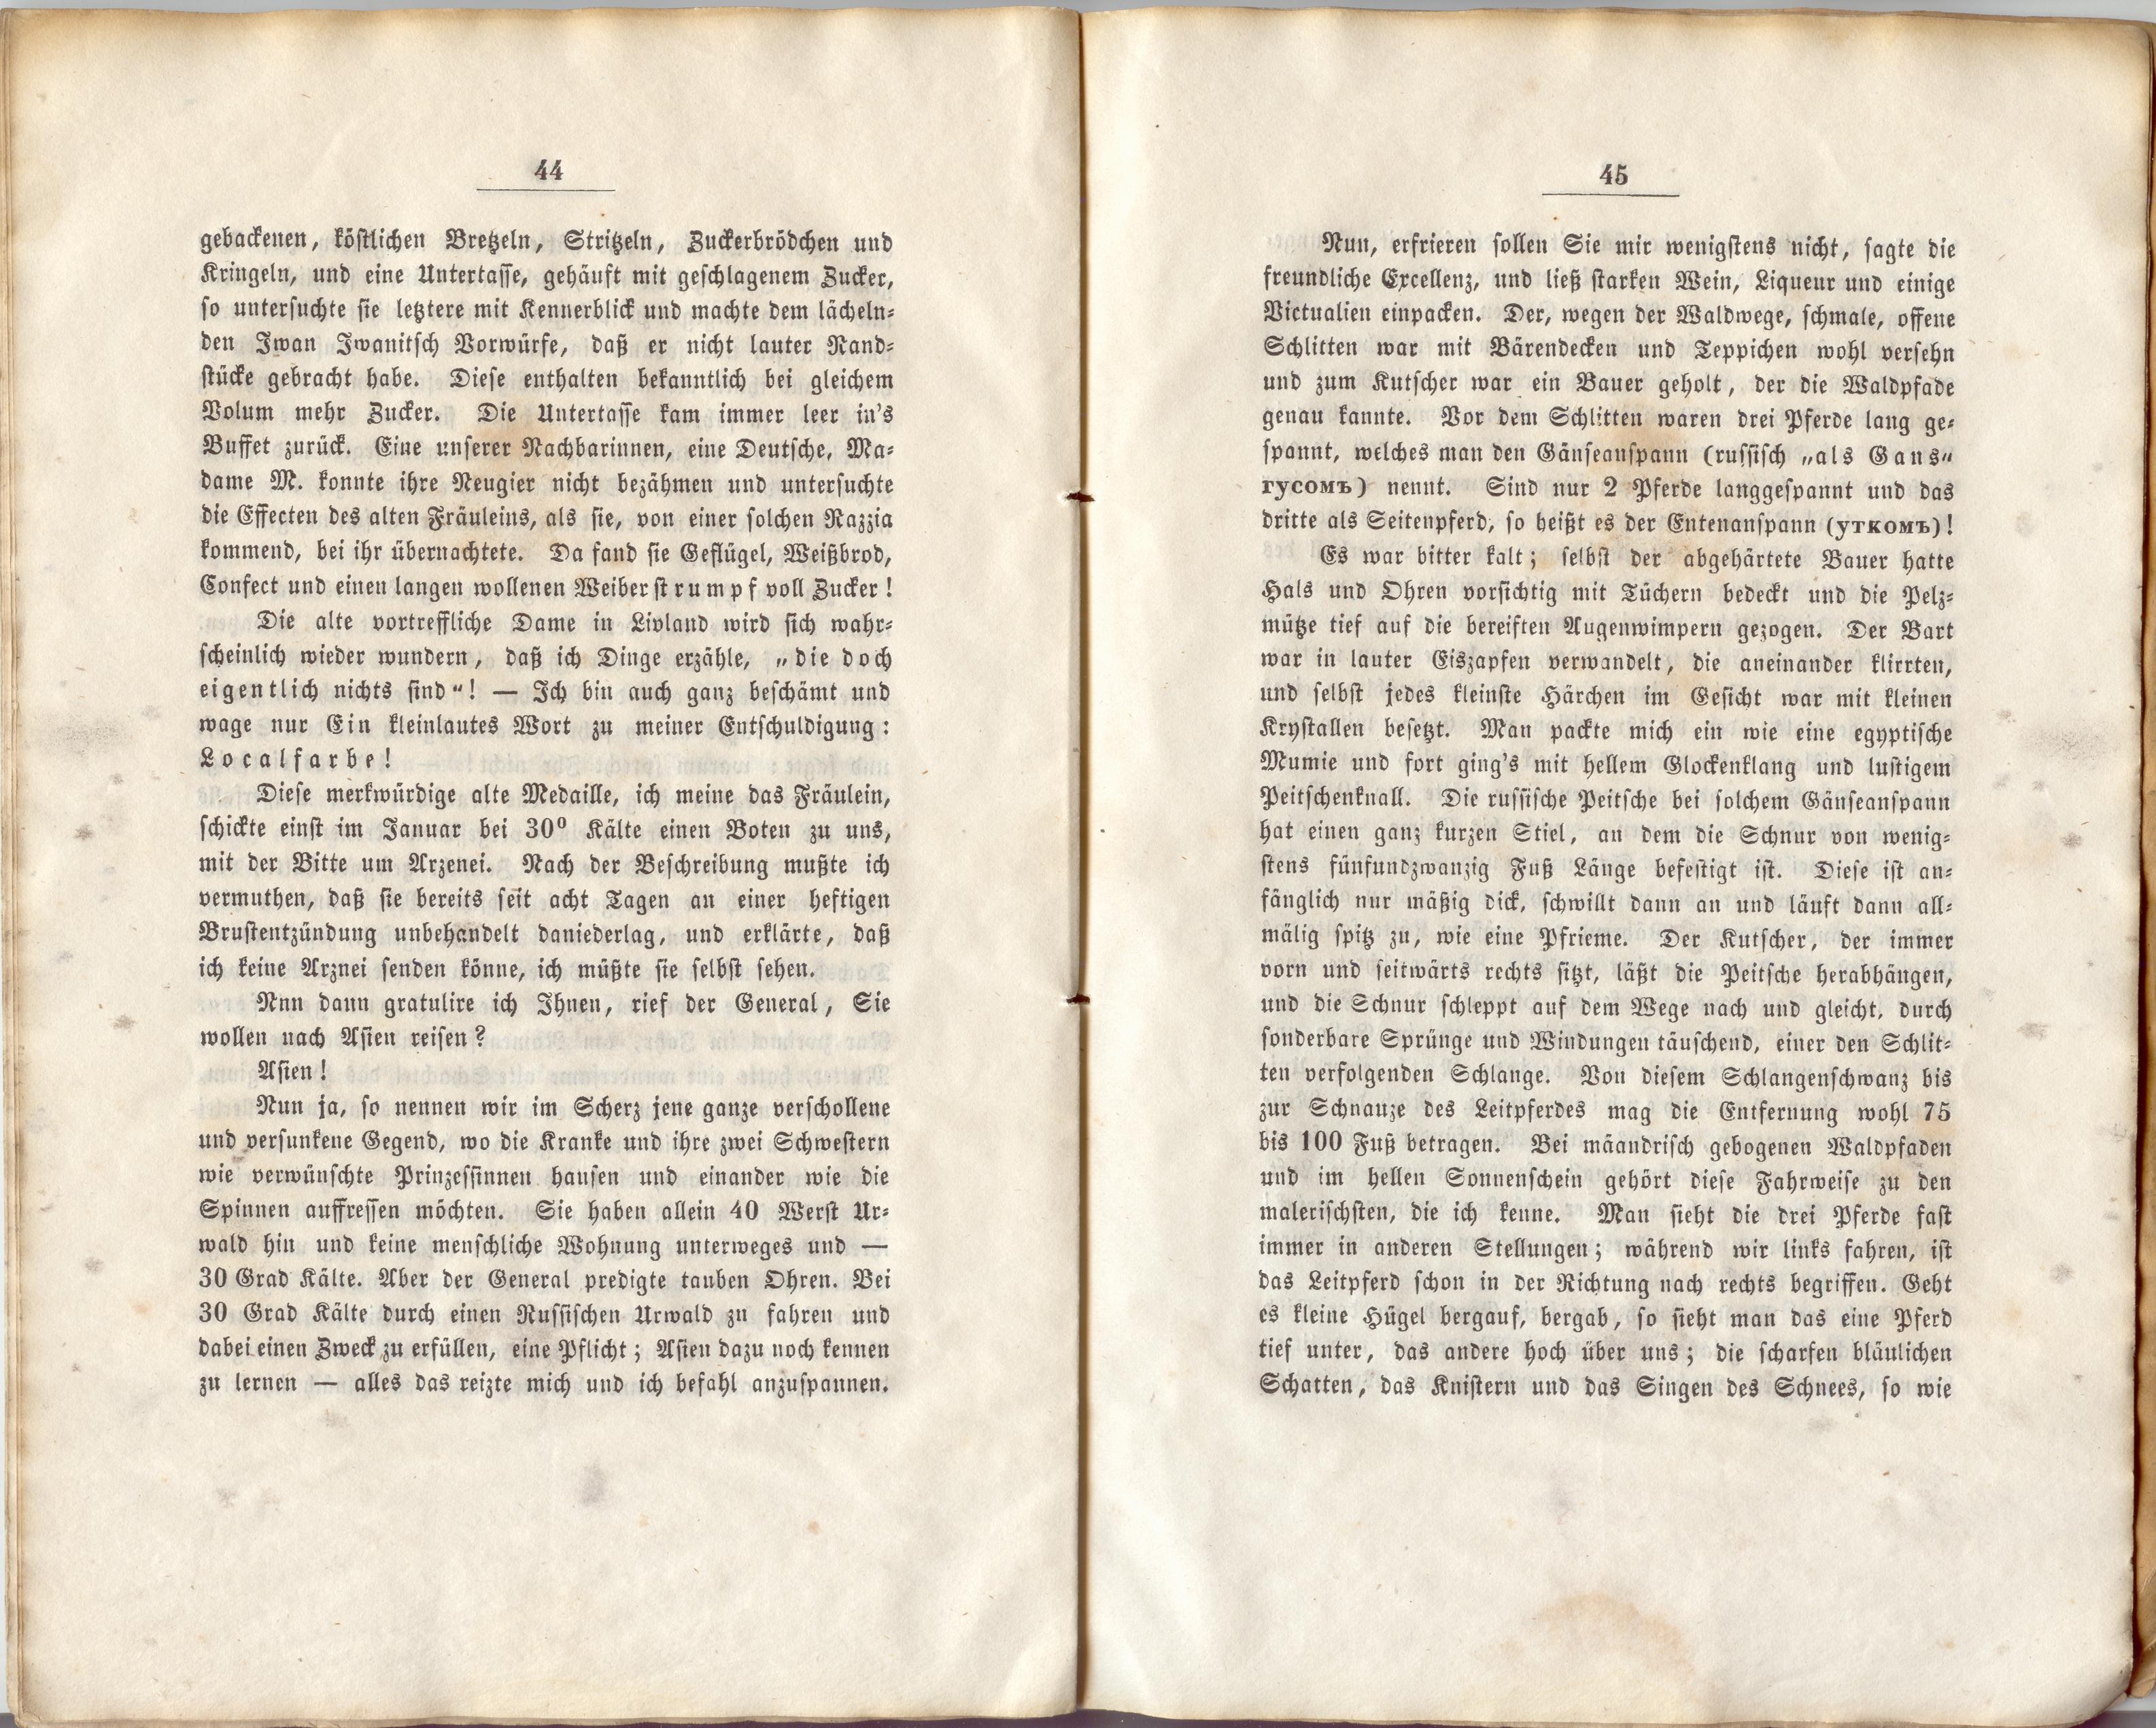 Medicinische Dorfgeschichten (1860) | 40. (44-45) Main body of text